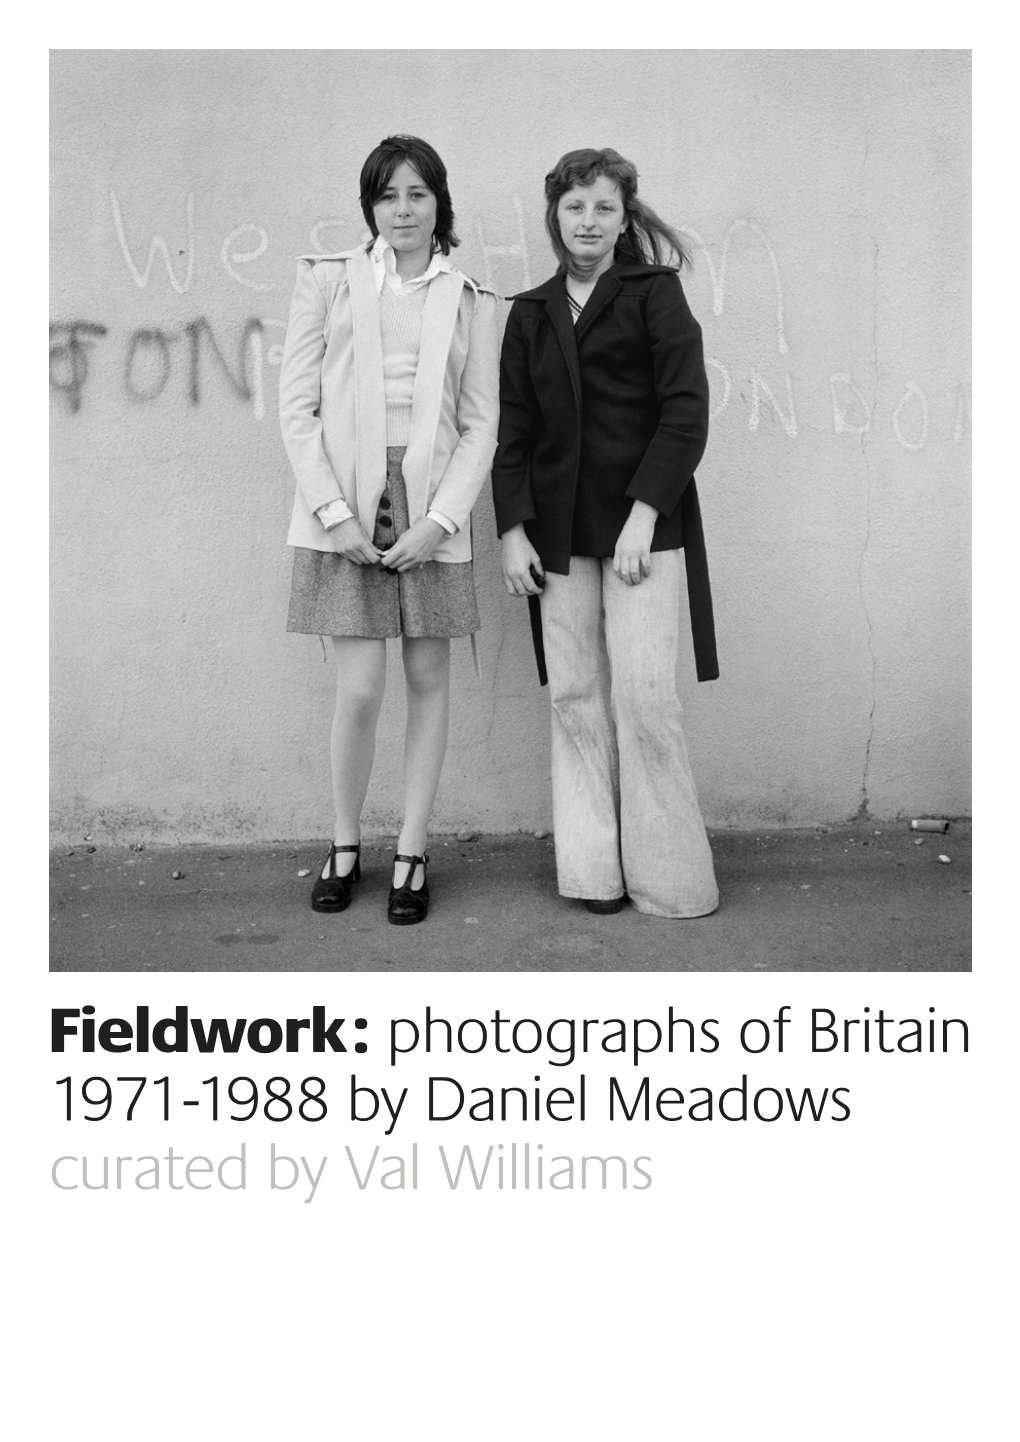 Fieldwork: Photographs of Britain 1971-1988 by Daniel Meadows